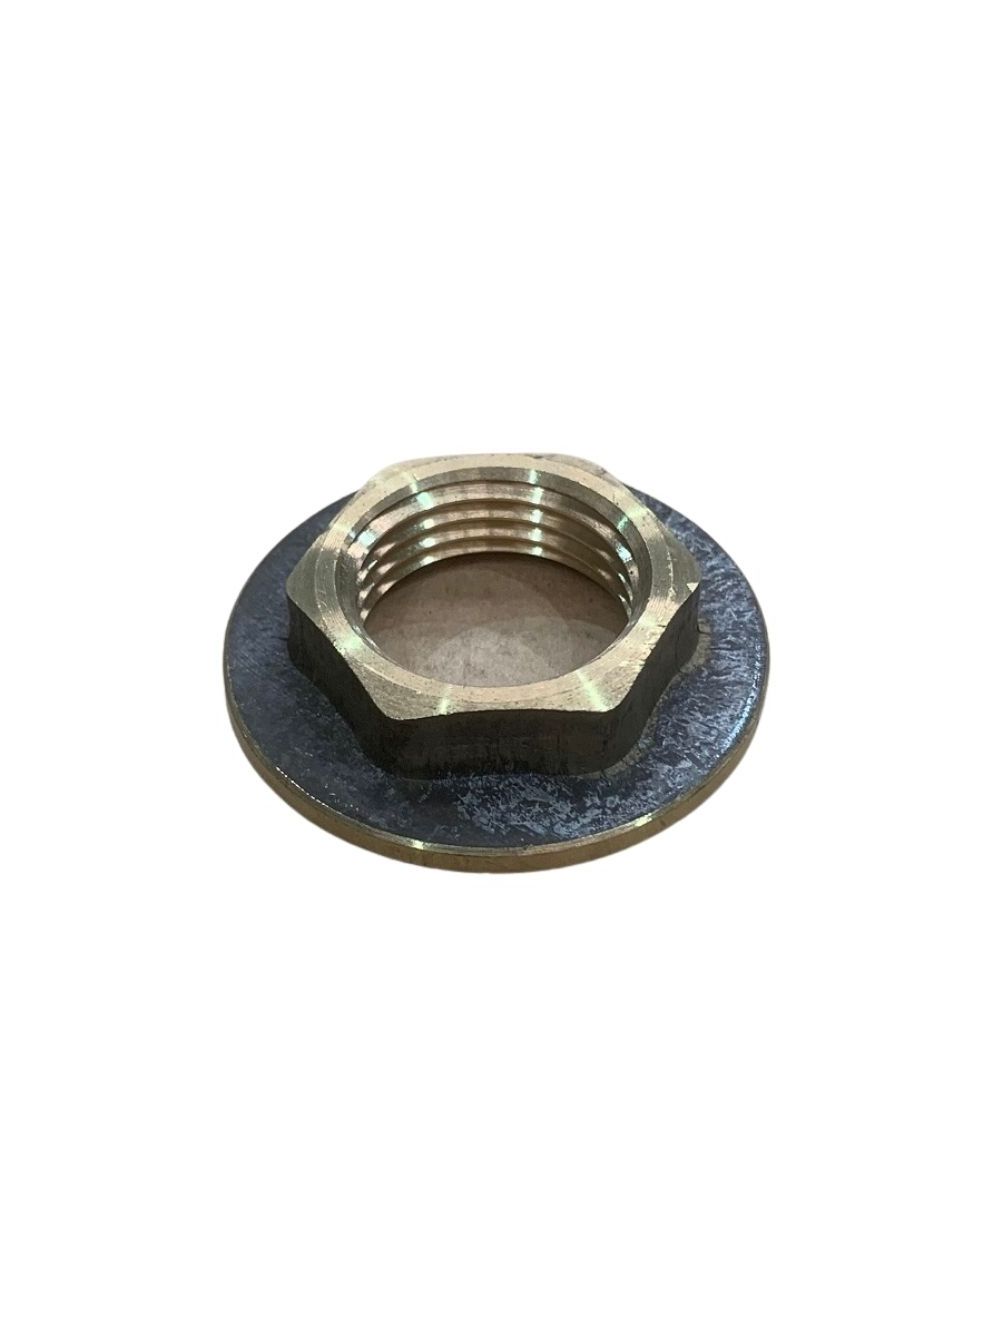 Nickel Plated Brass Locking Nut 1/2 NPT, NN-13-BR